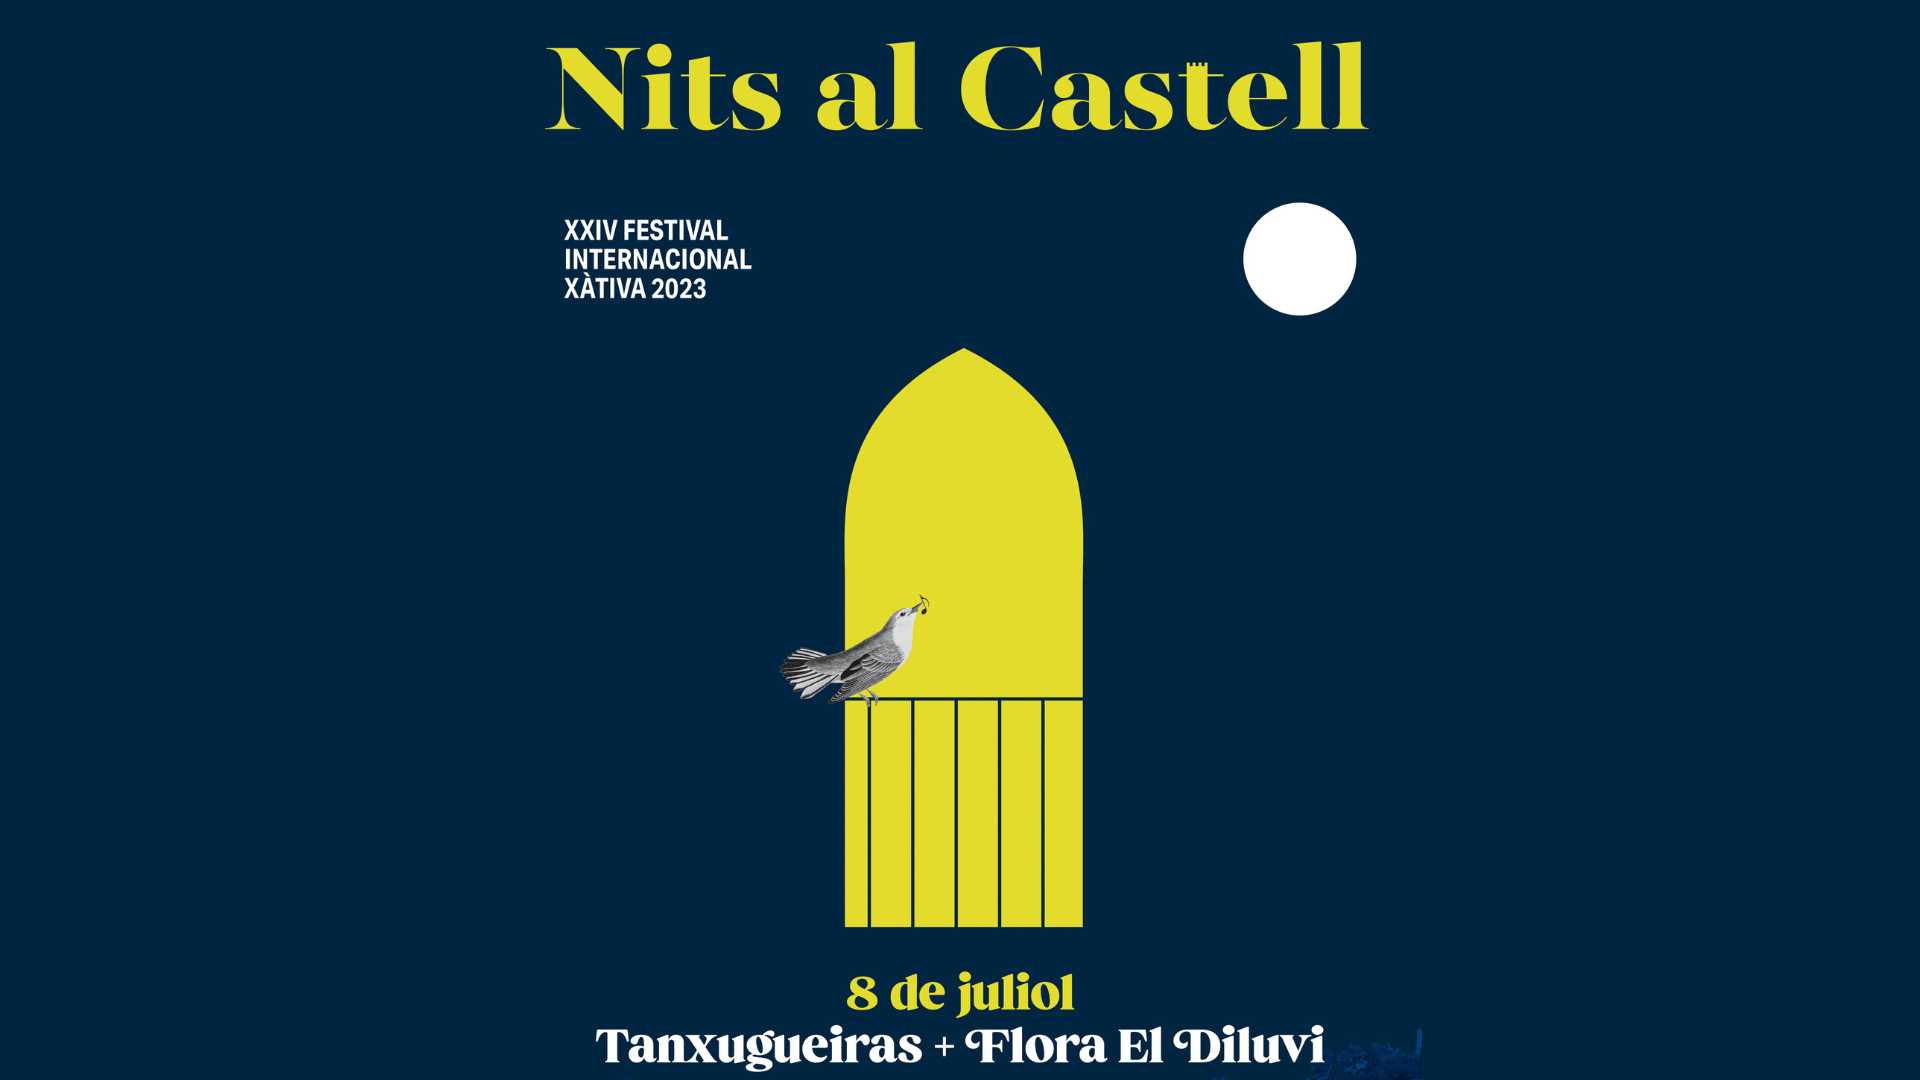 NITS AL CASTELL 2023